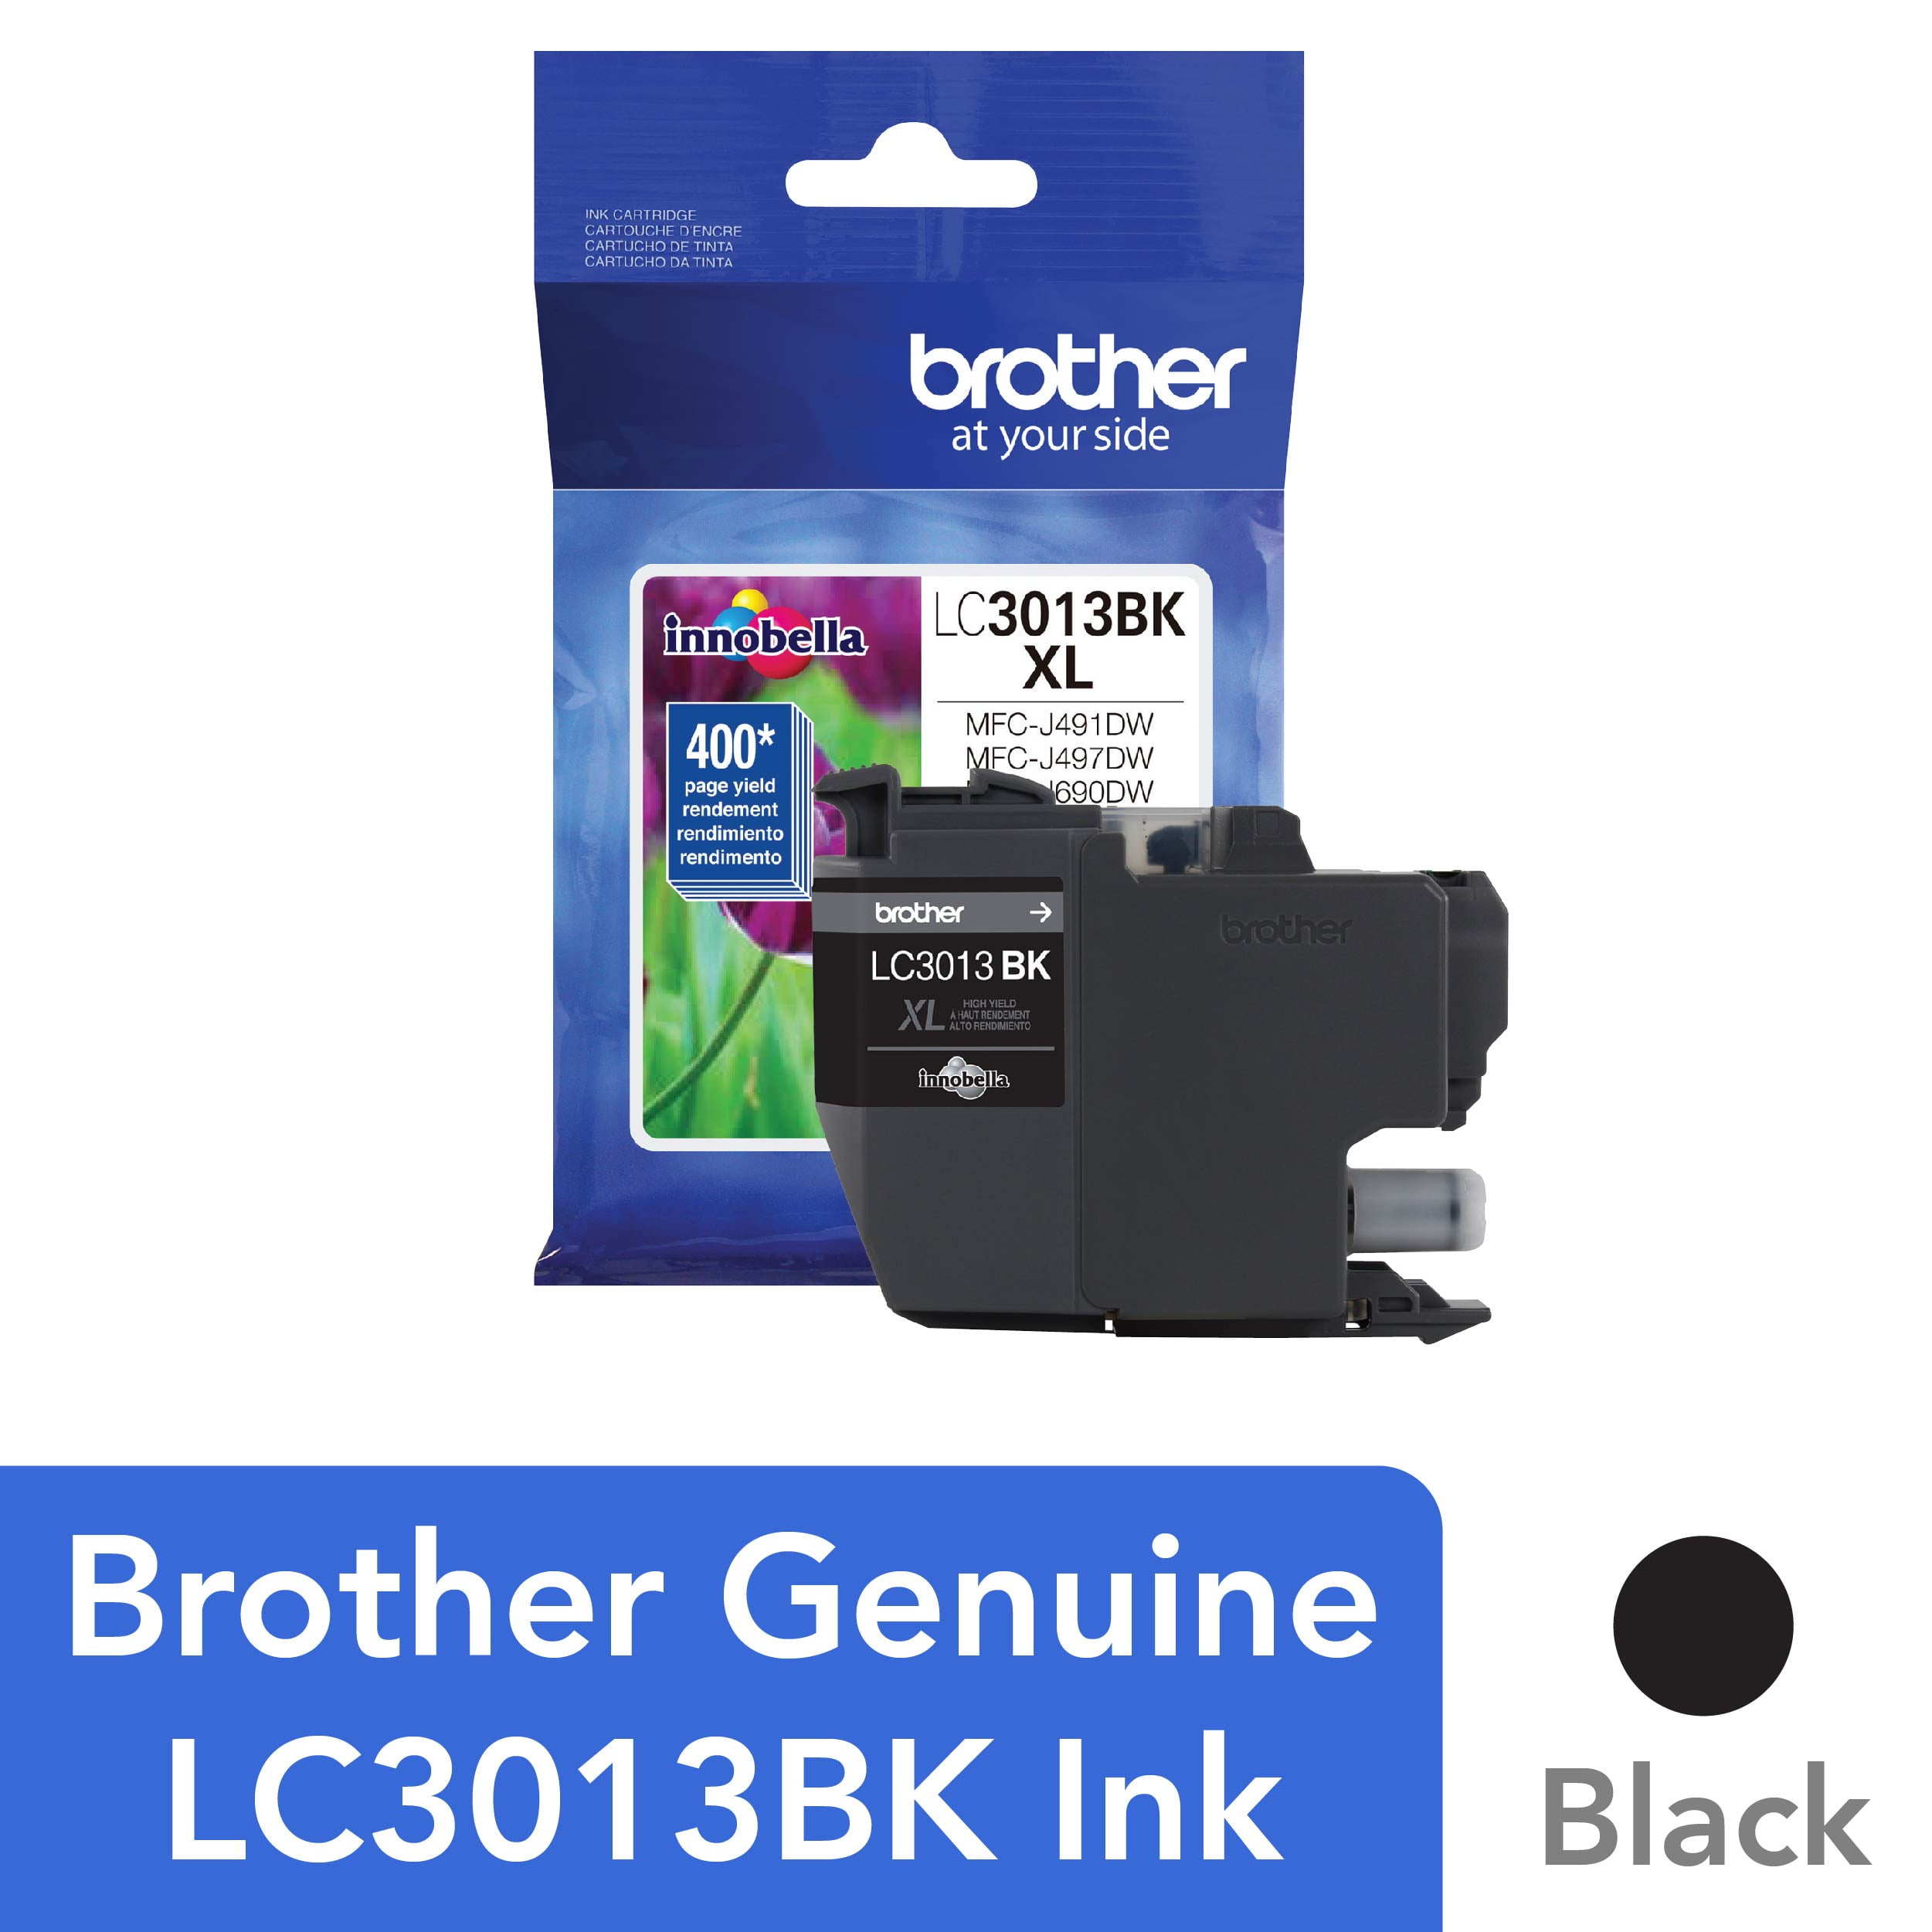 Brother LC3013BK High-yield Printer Ink Cartridge - Walmart.com